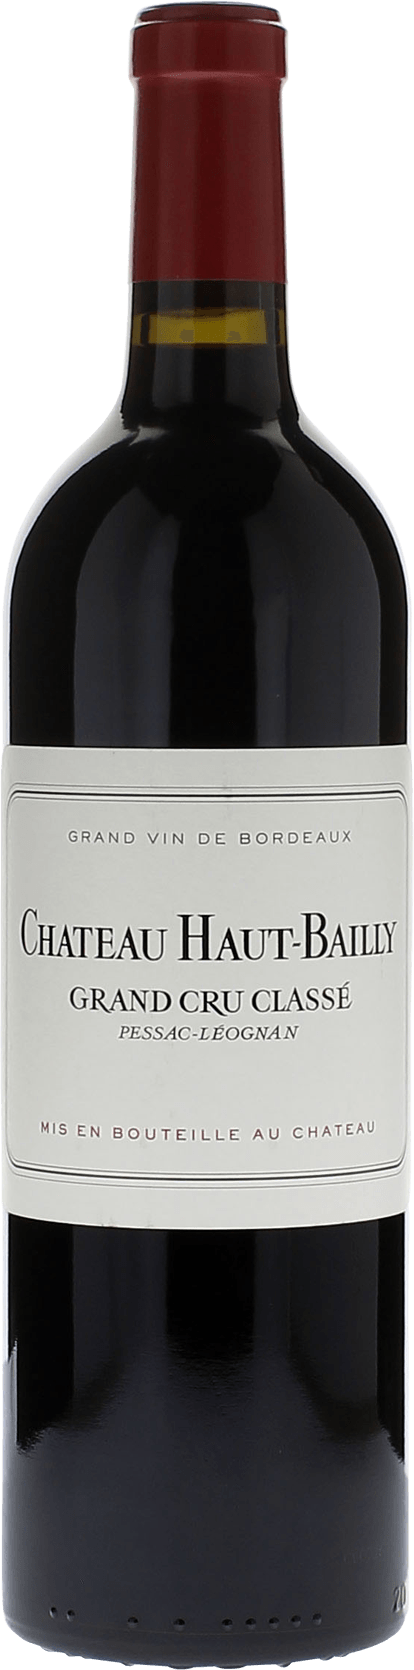 Haut bailly 2012 cru class Pessac-Lognan, Bordeaux rouge